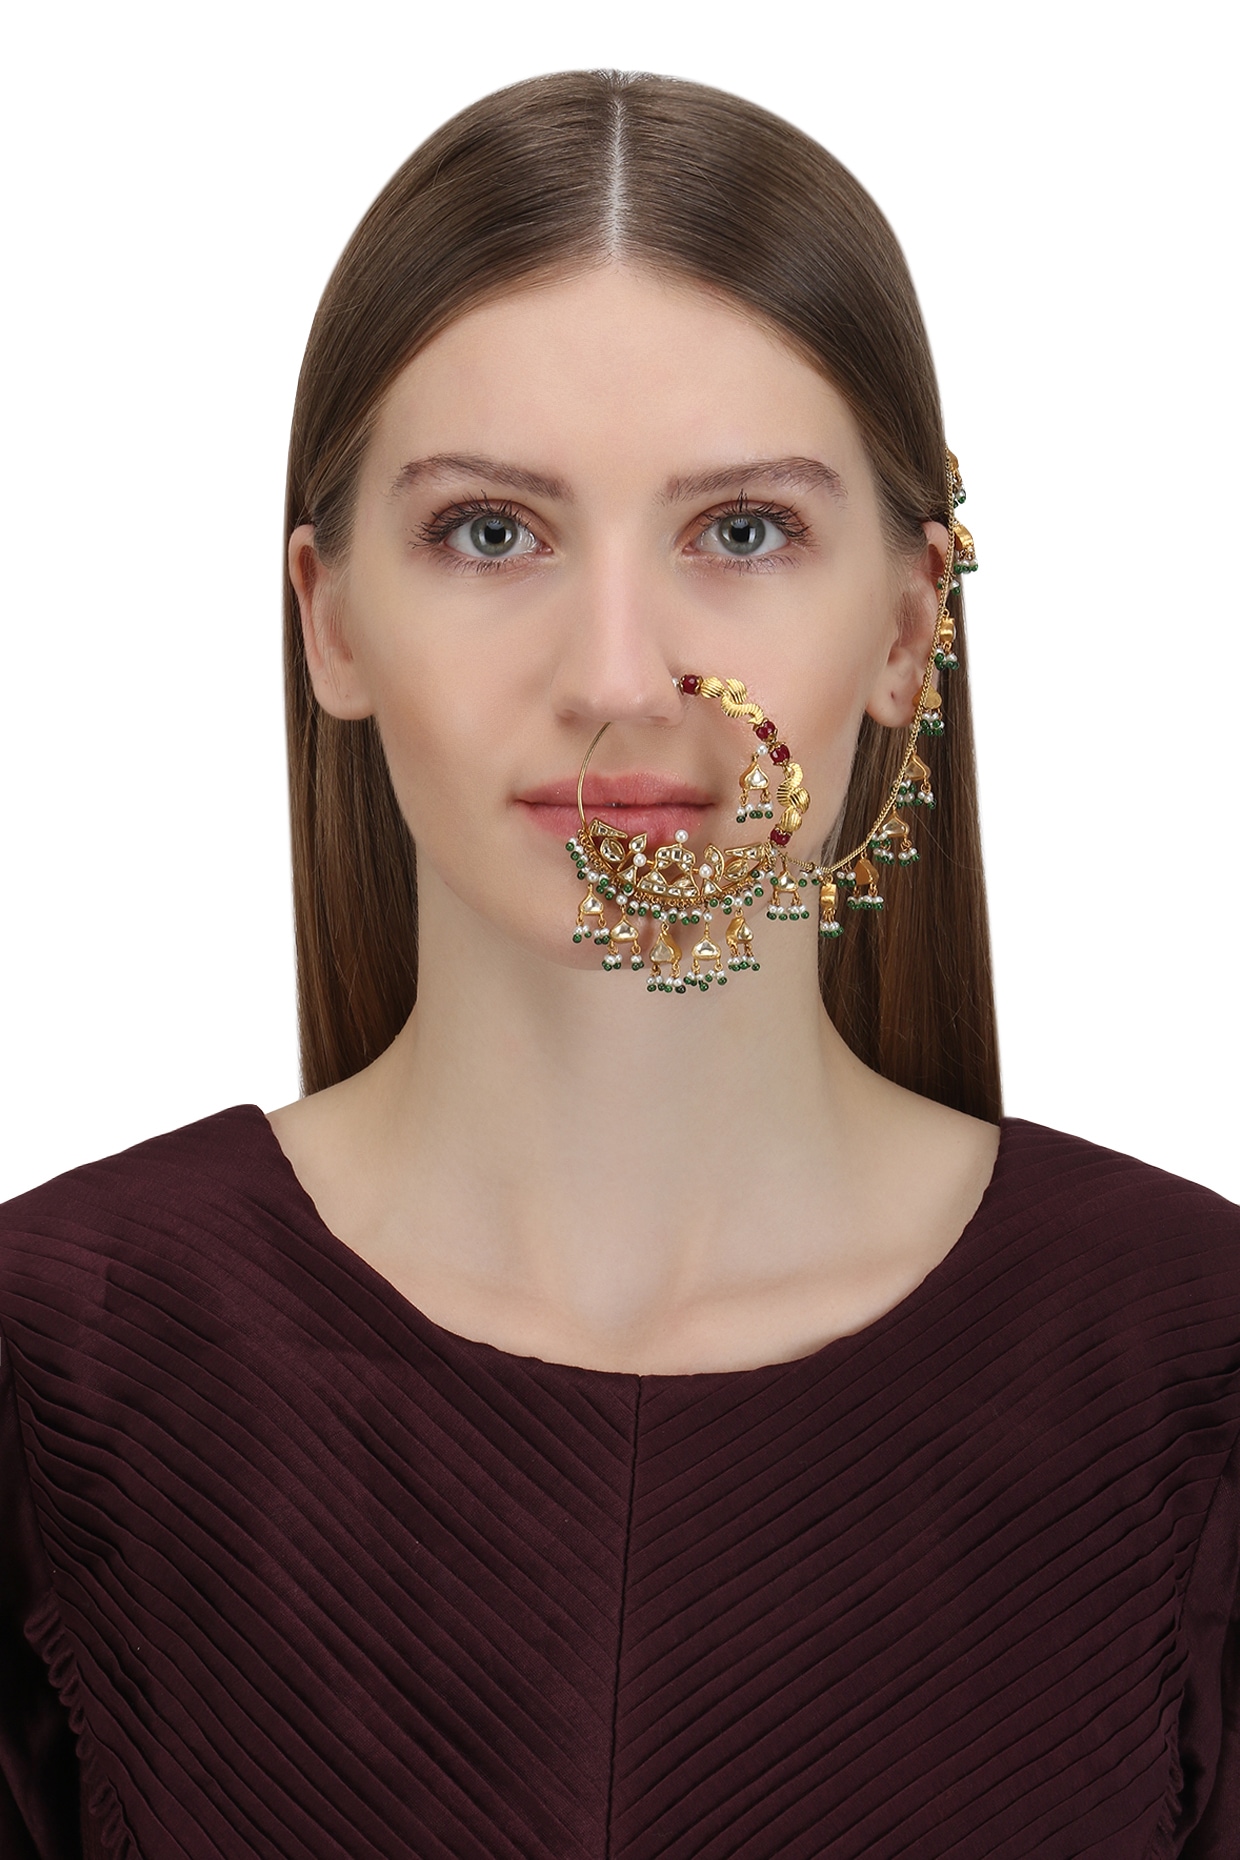 Pahadi Nath Simple Uttarakhand Jewelry Fashion Accessory Artificial Nose  Ring | eBay